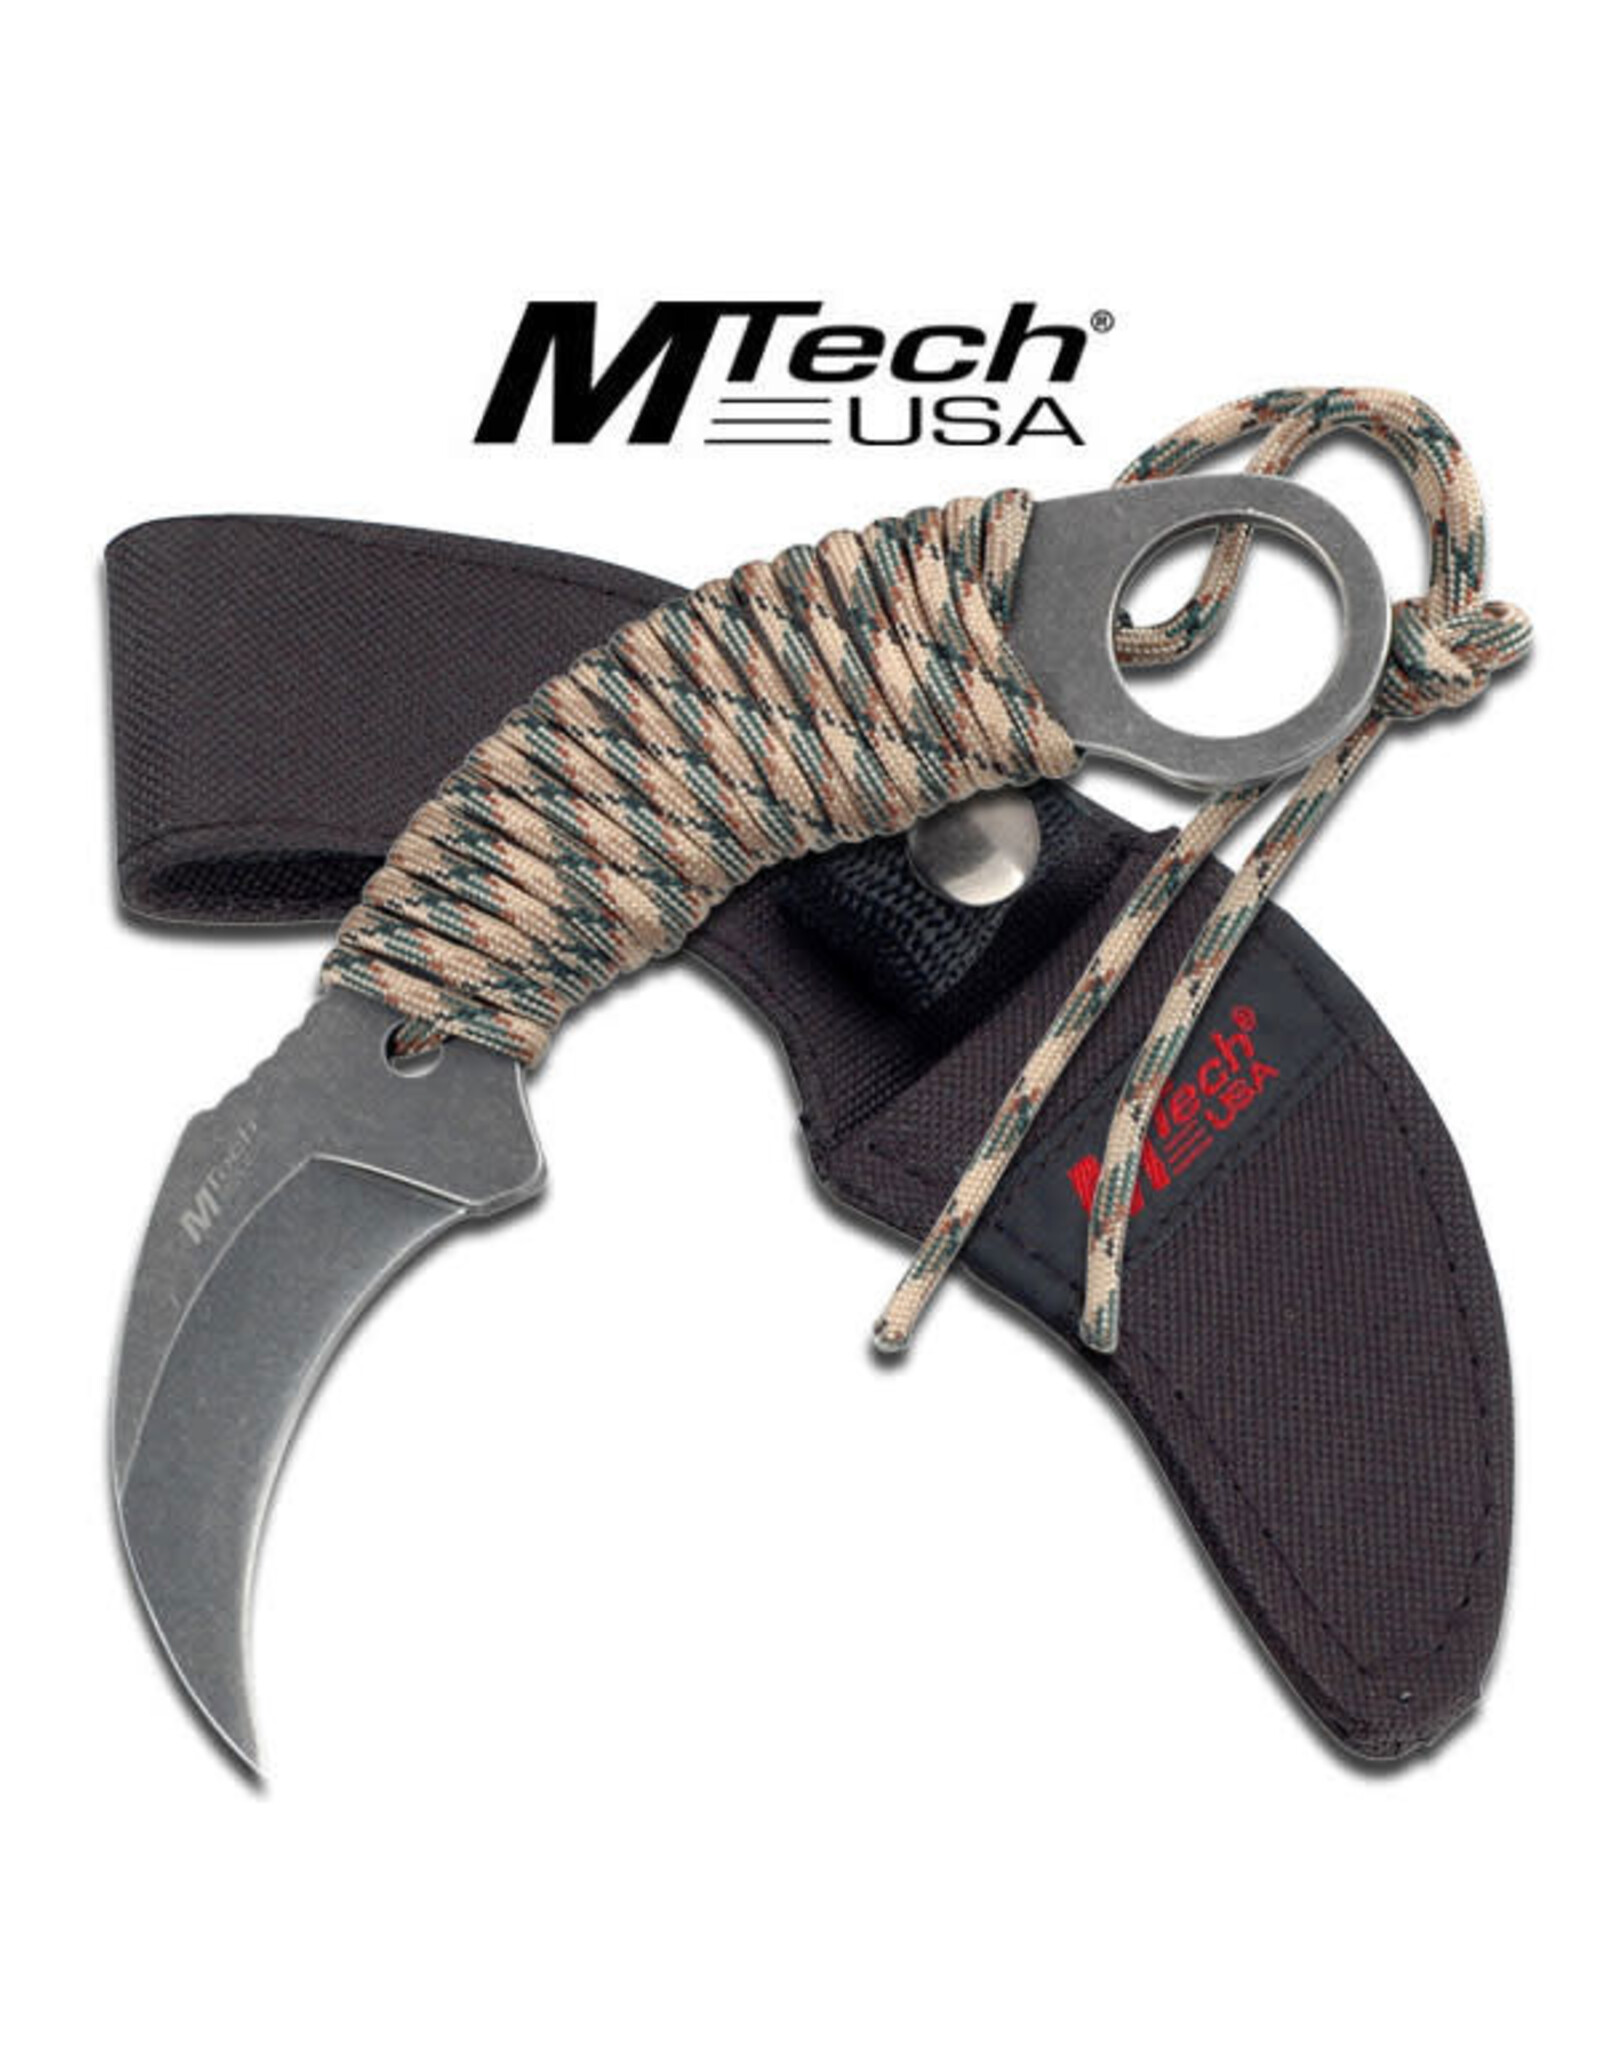 MTech Usa MTech USA MT-670 KARAMBIT KNIFE 6.65" OVERALL